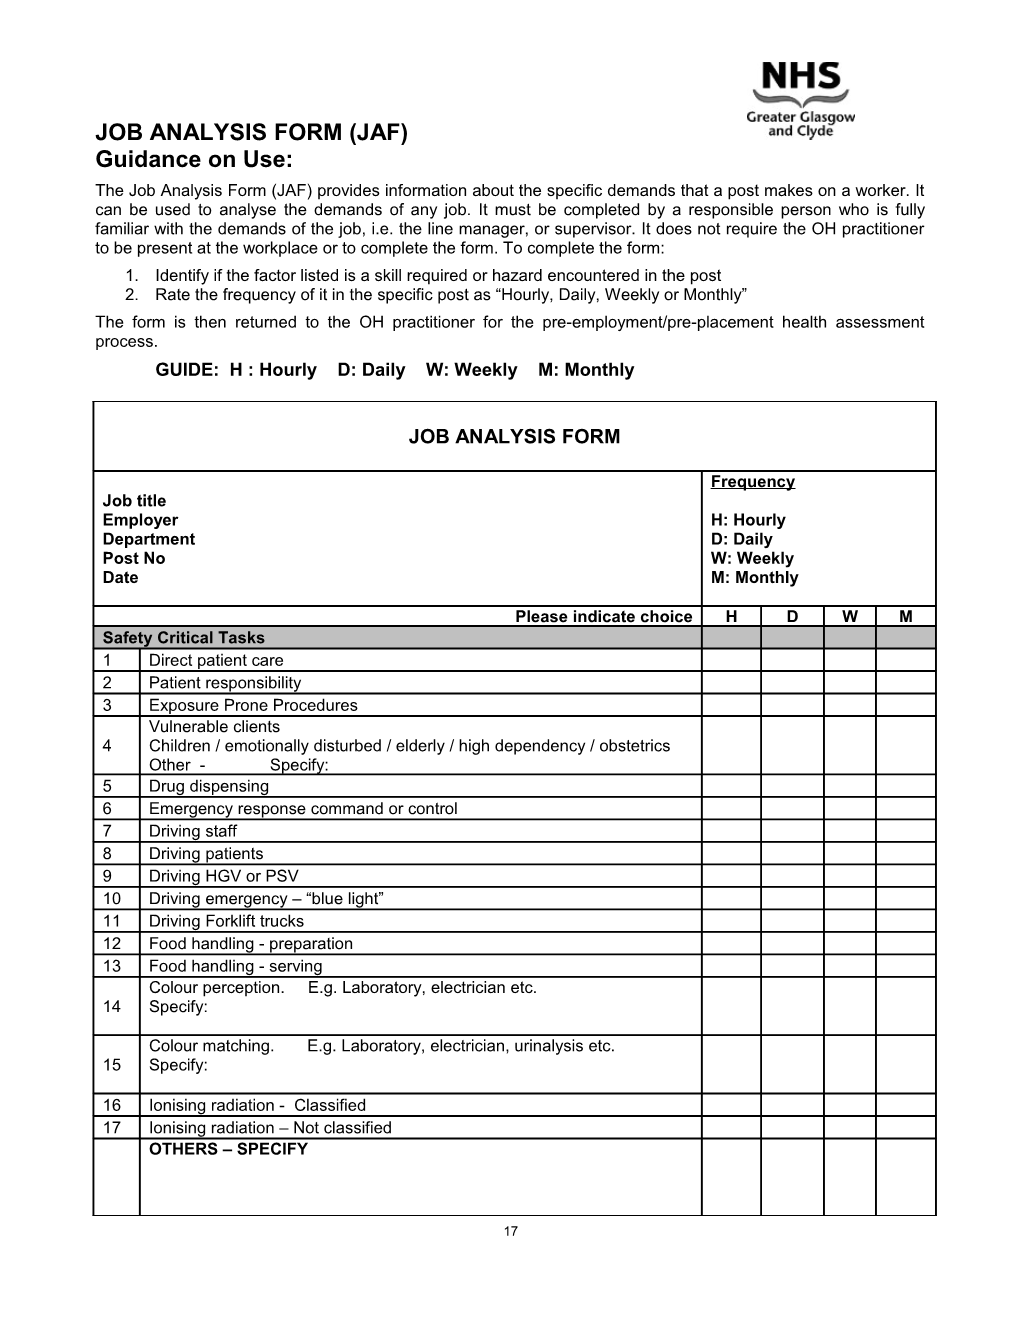 Occupational Health - Job Analysis Form